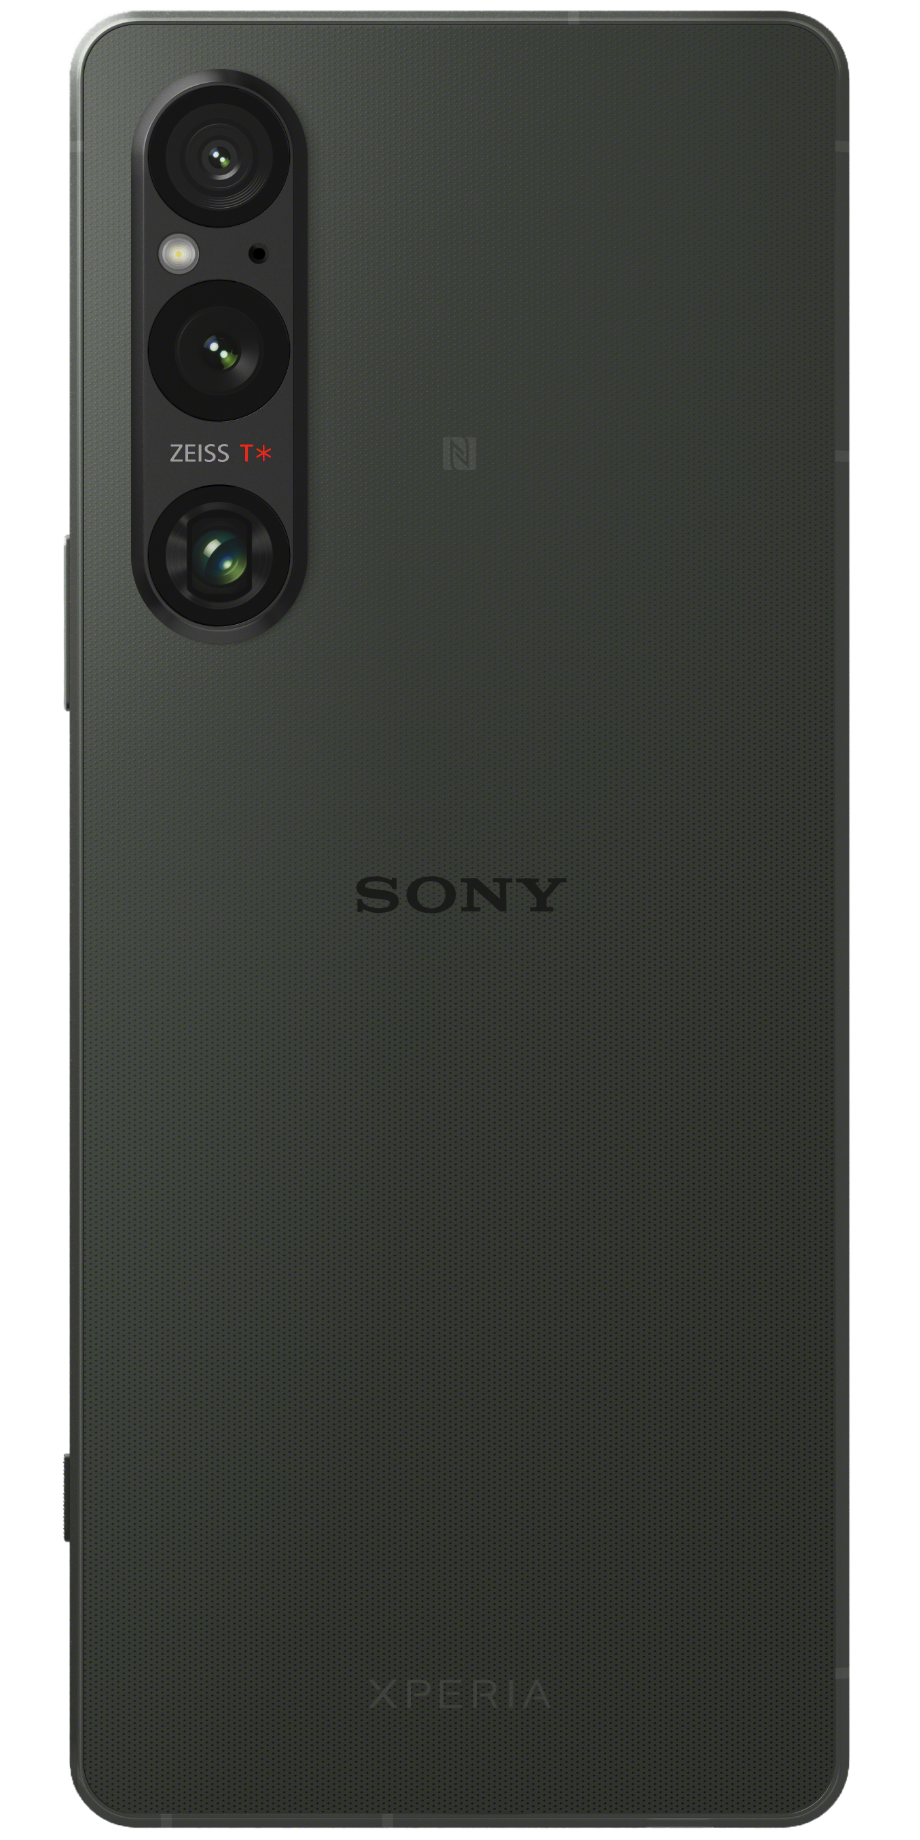 Sony Xperia 1 V Datenblatt - Foto des Sony Xperia 1 V